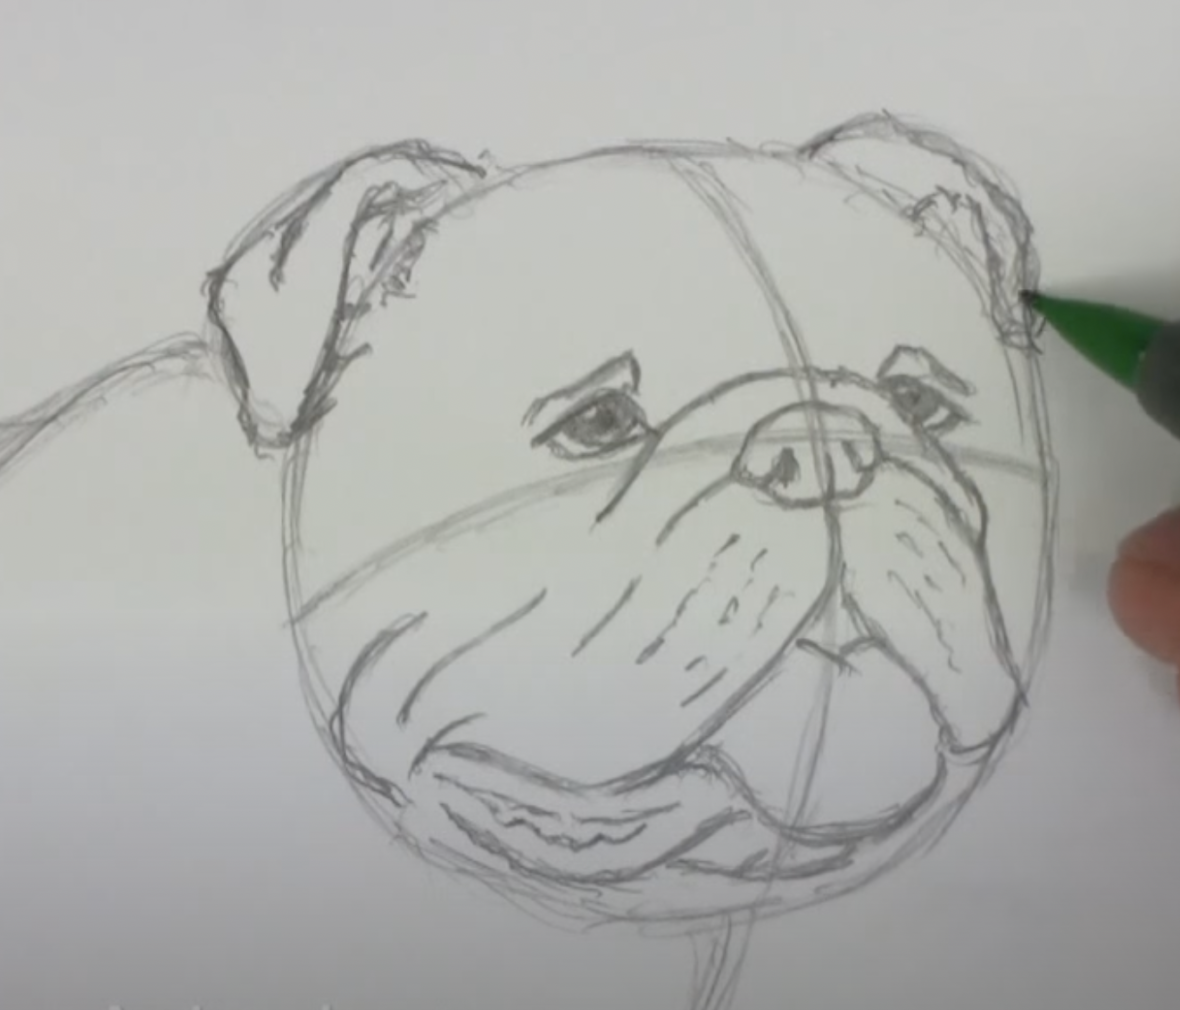 How to Draw an English Bulldog